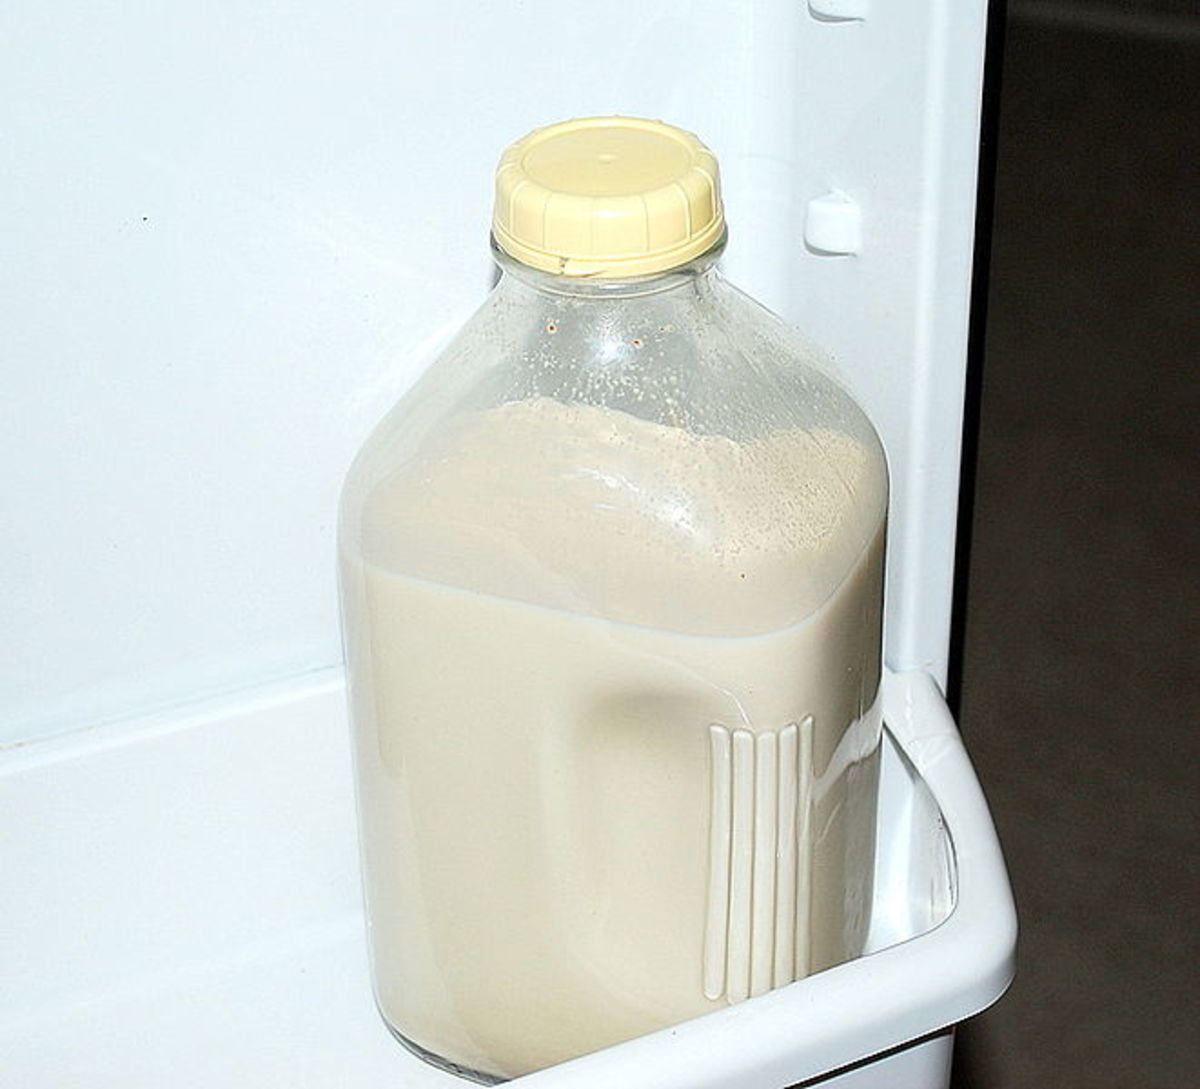 A jug of almond milk in the fridge